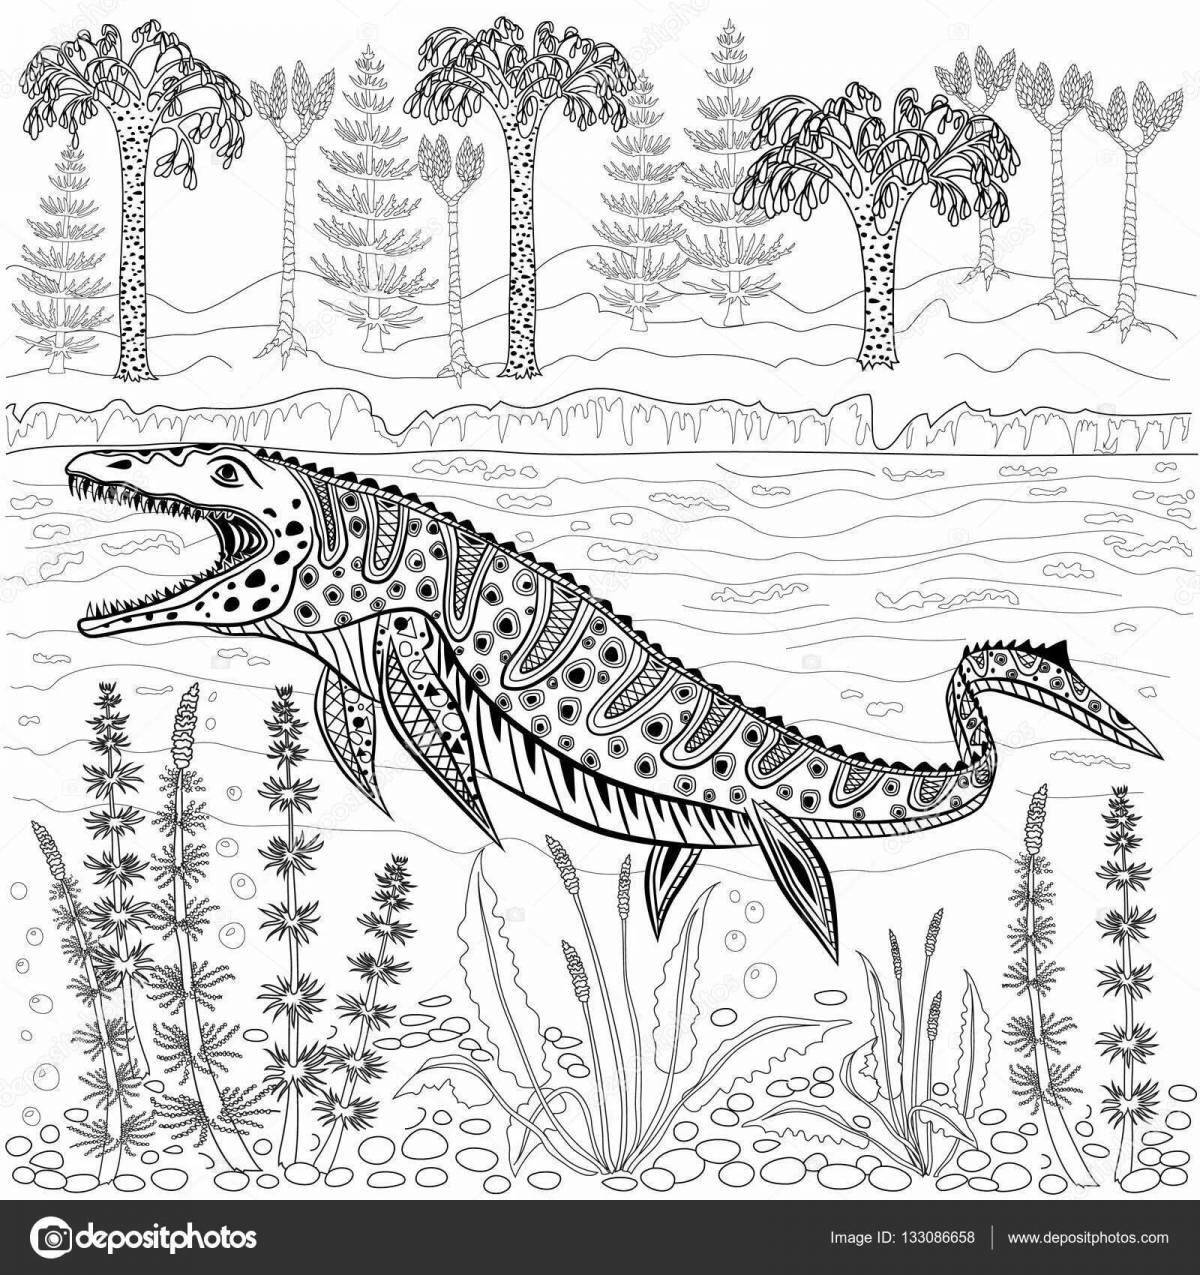 Fascinating Paleozoic coloring book